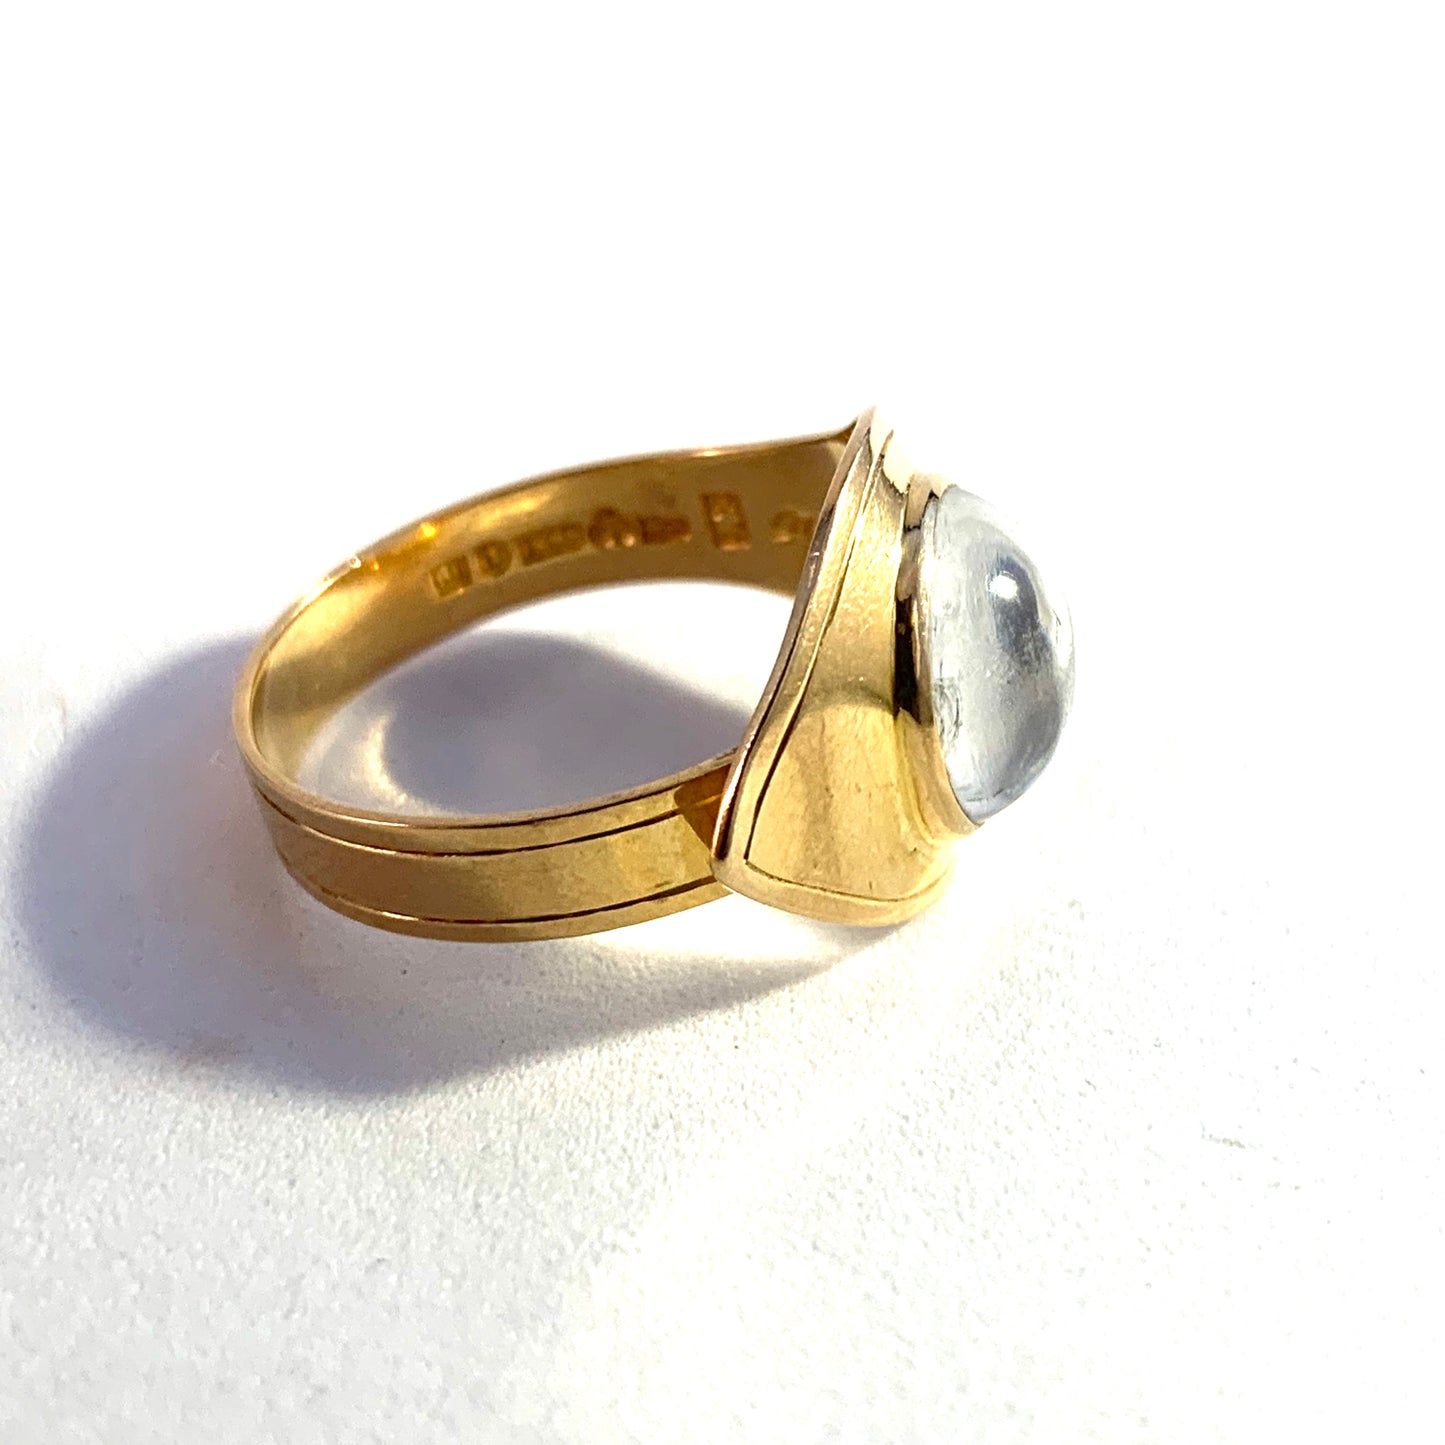 Sigurd Persson for Stigbert, Stockholm 1952 Mid Century Modern 18k Gold Moonstone Ring.